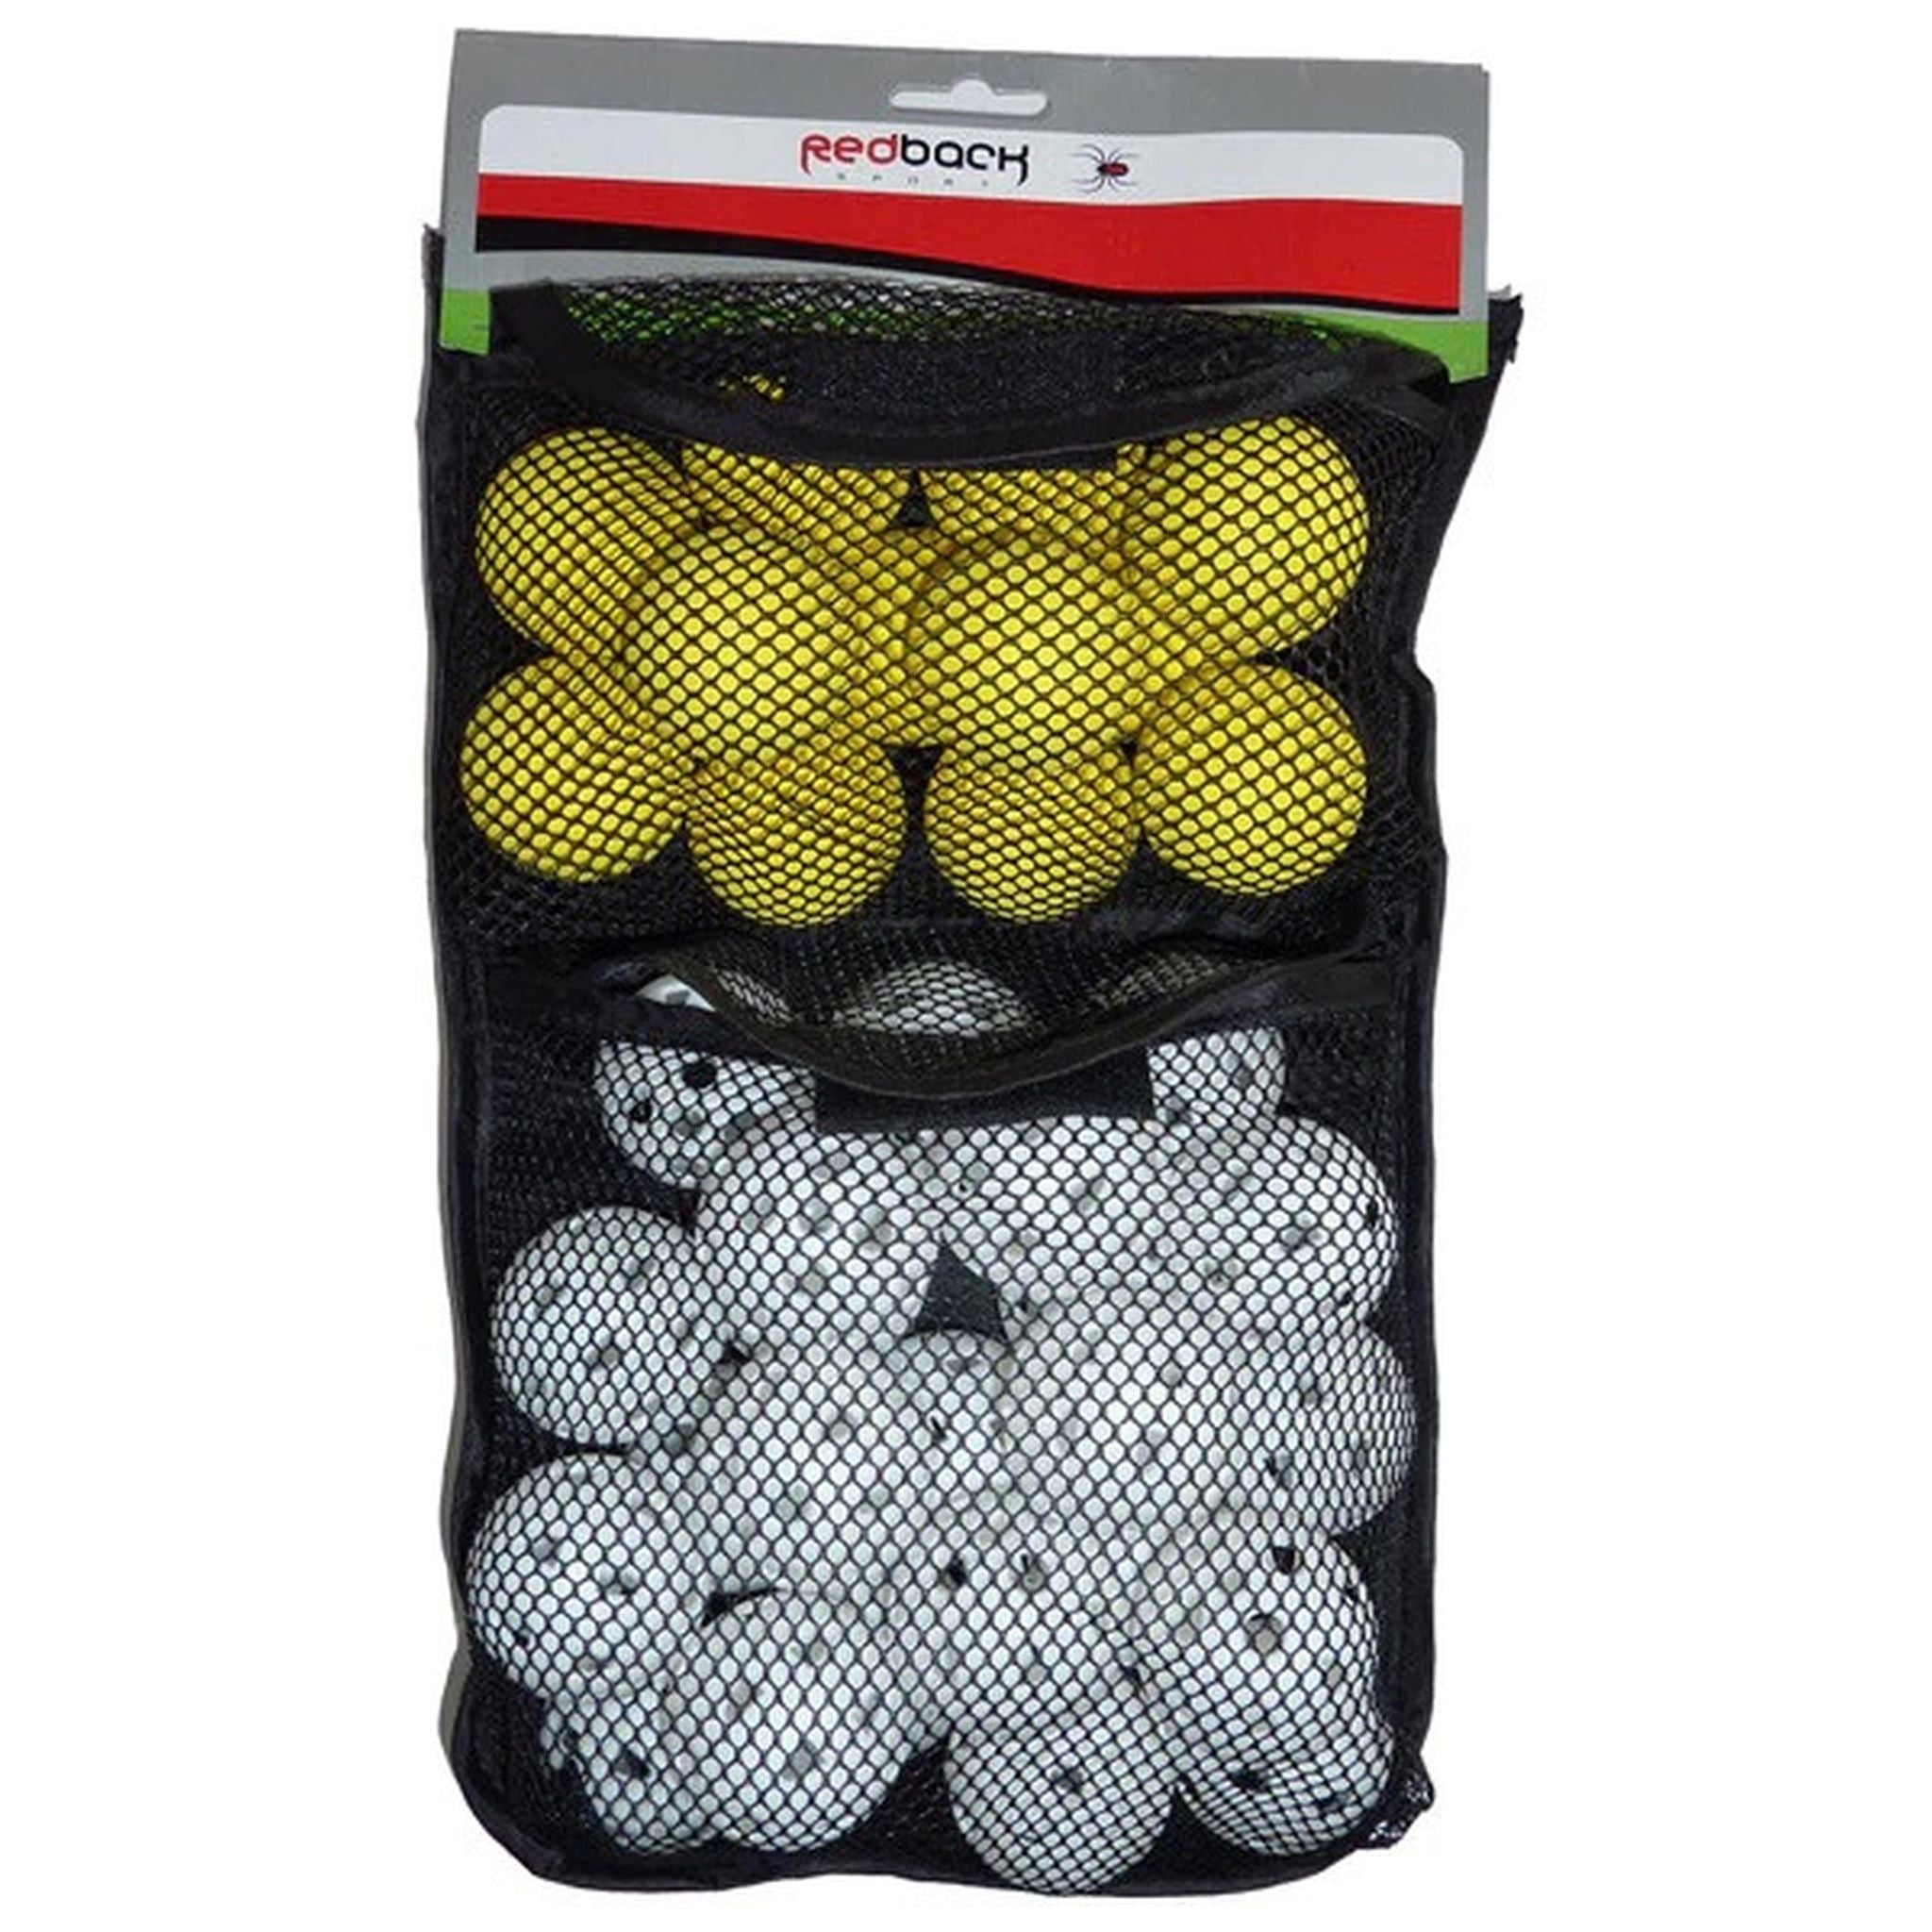 Redback Practice Golf Balls - Pack of 36